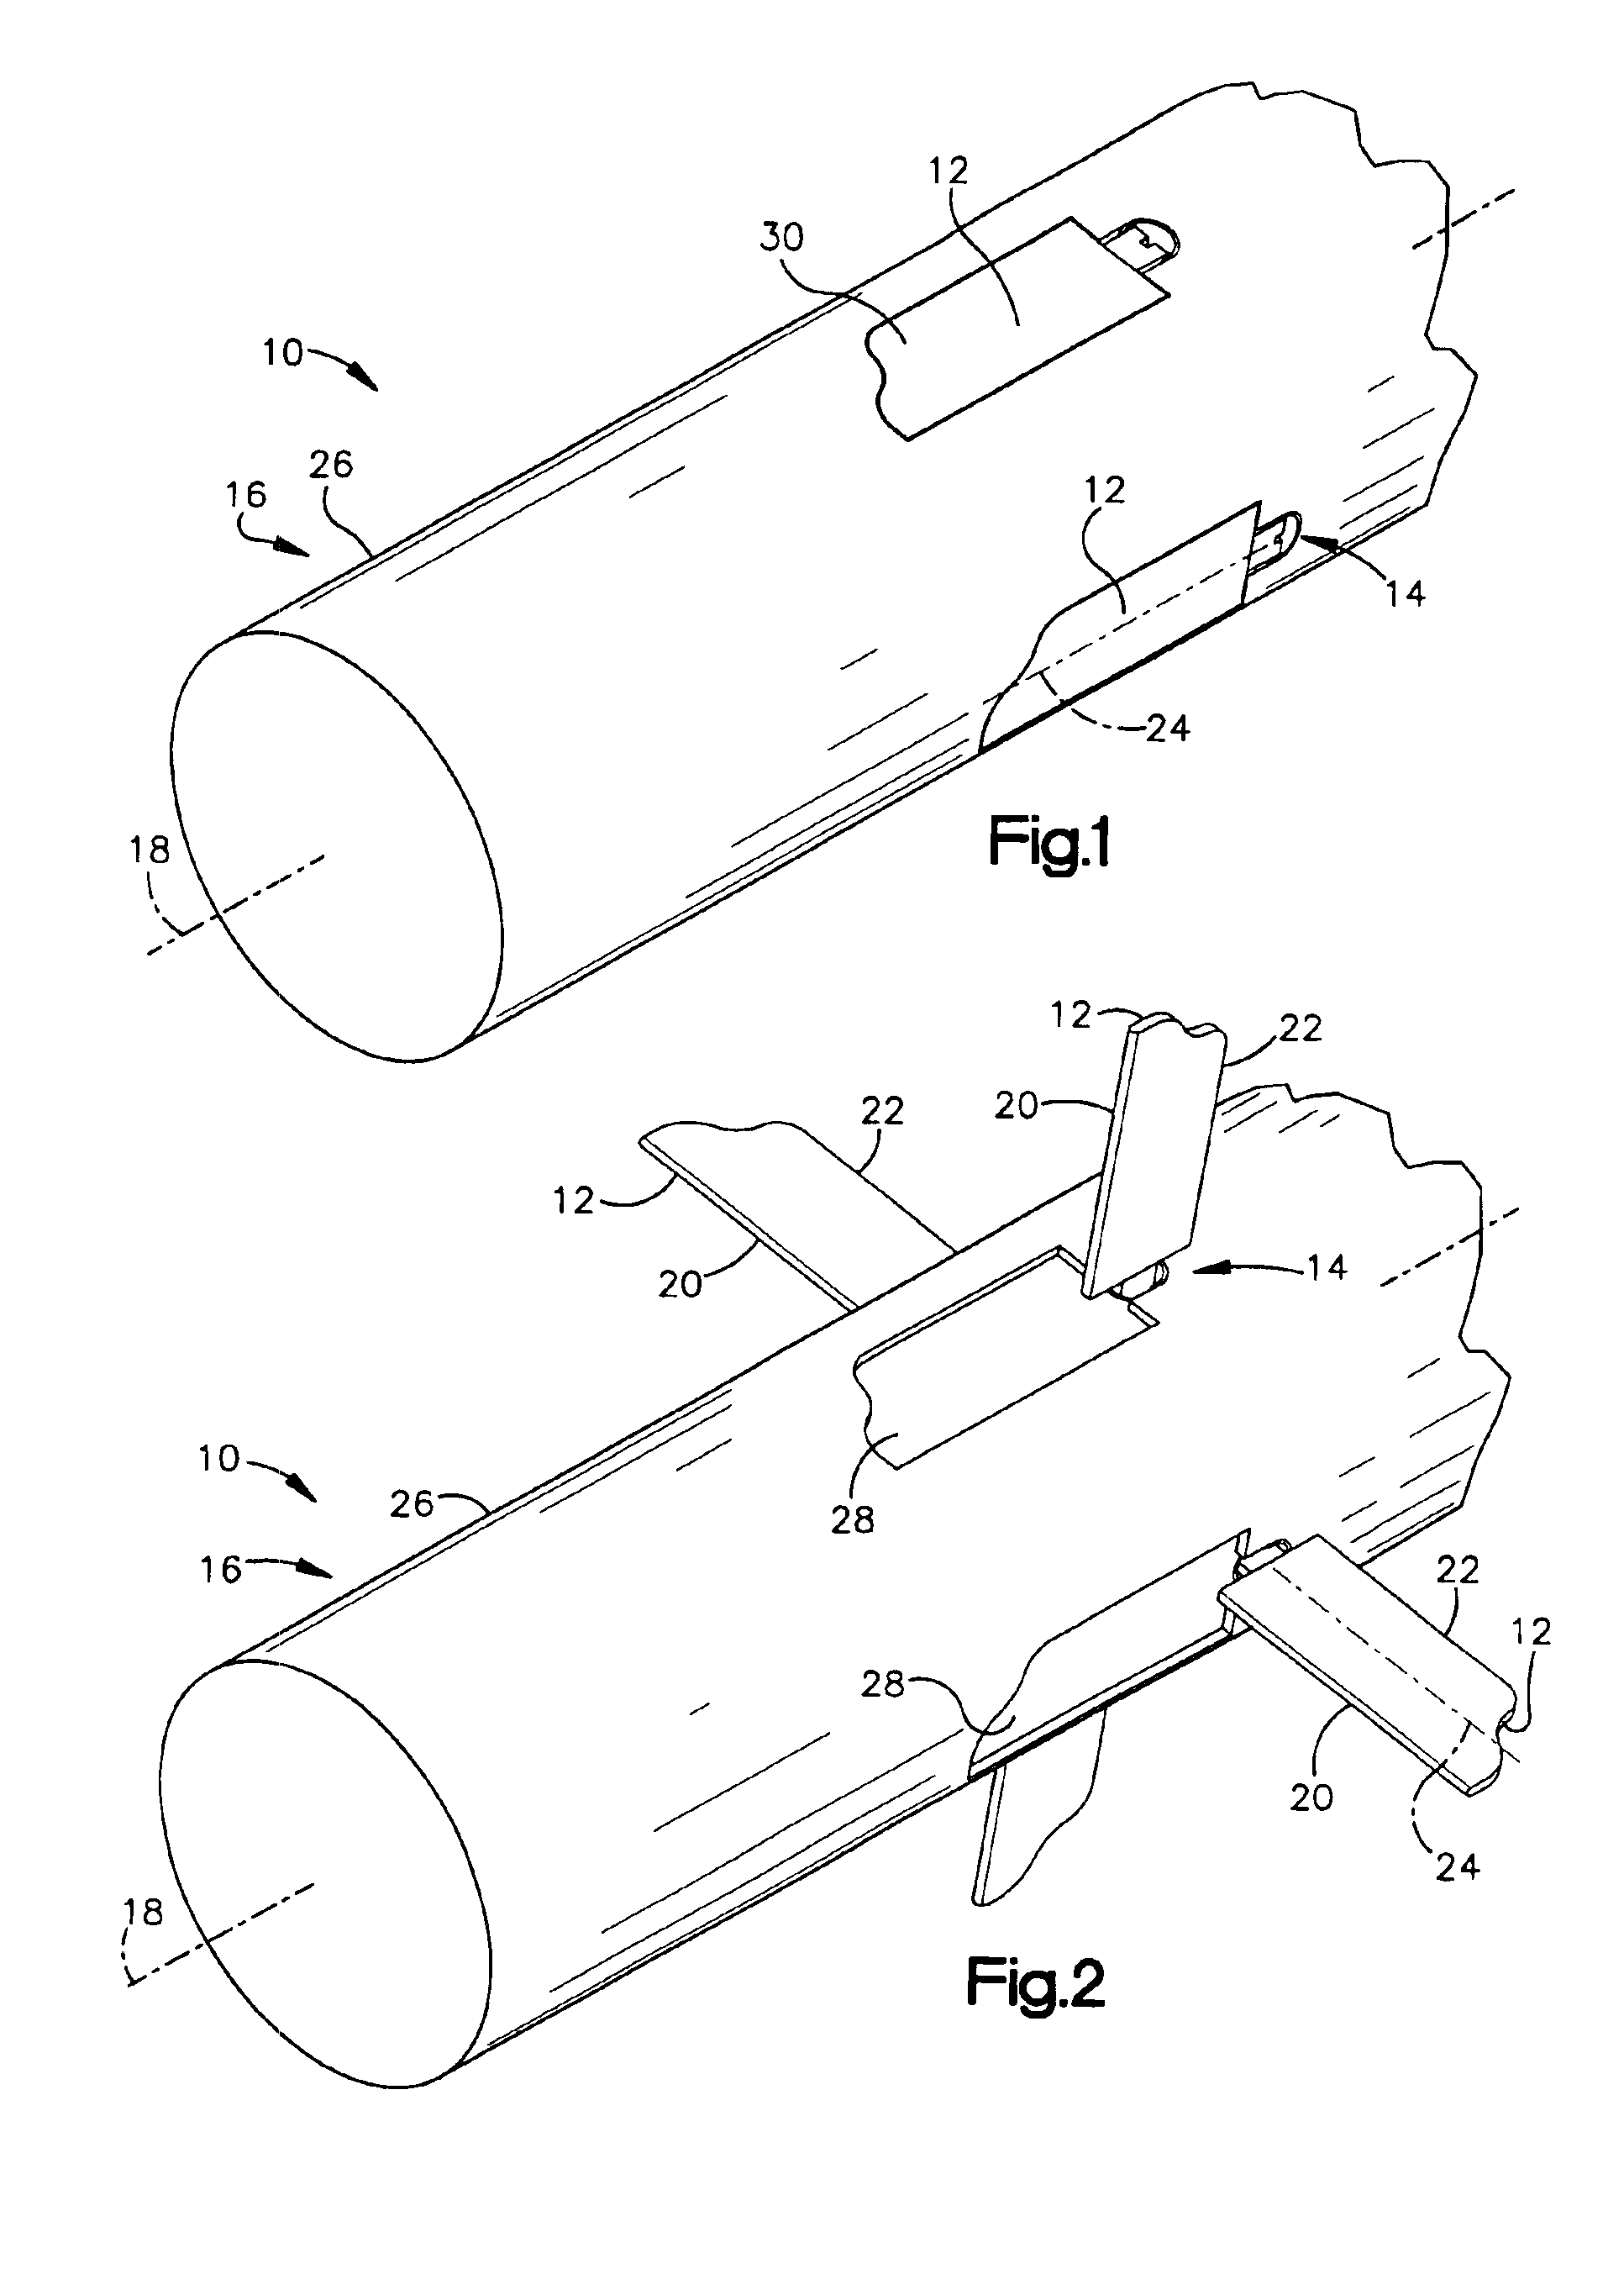 Deployment mechanism for stowable fins